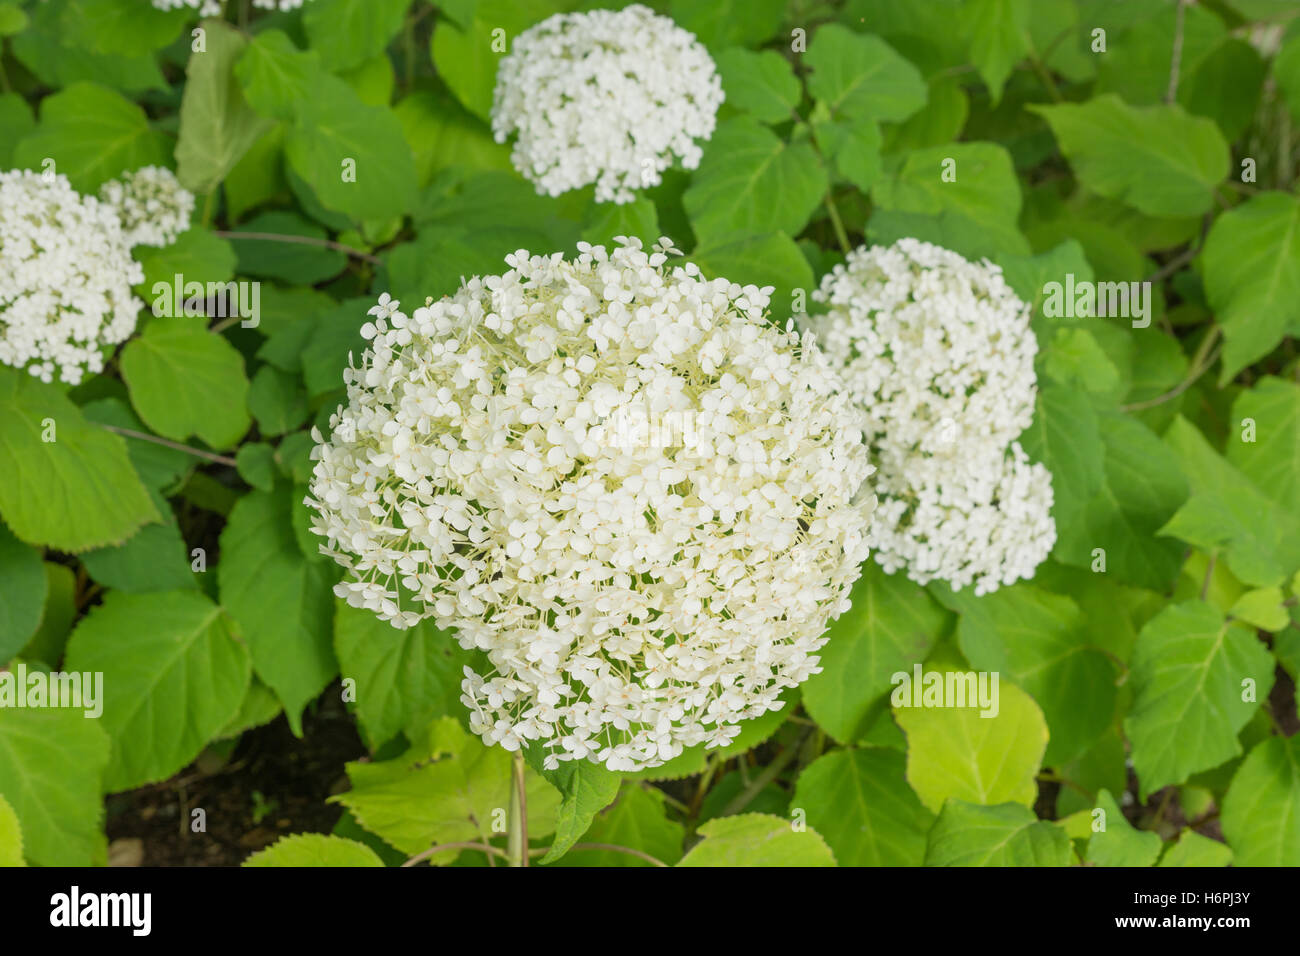 Hydrangea arborescens 'Annabelle' Stock Photo